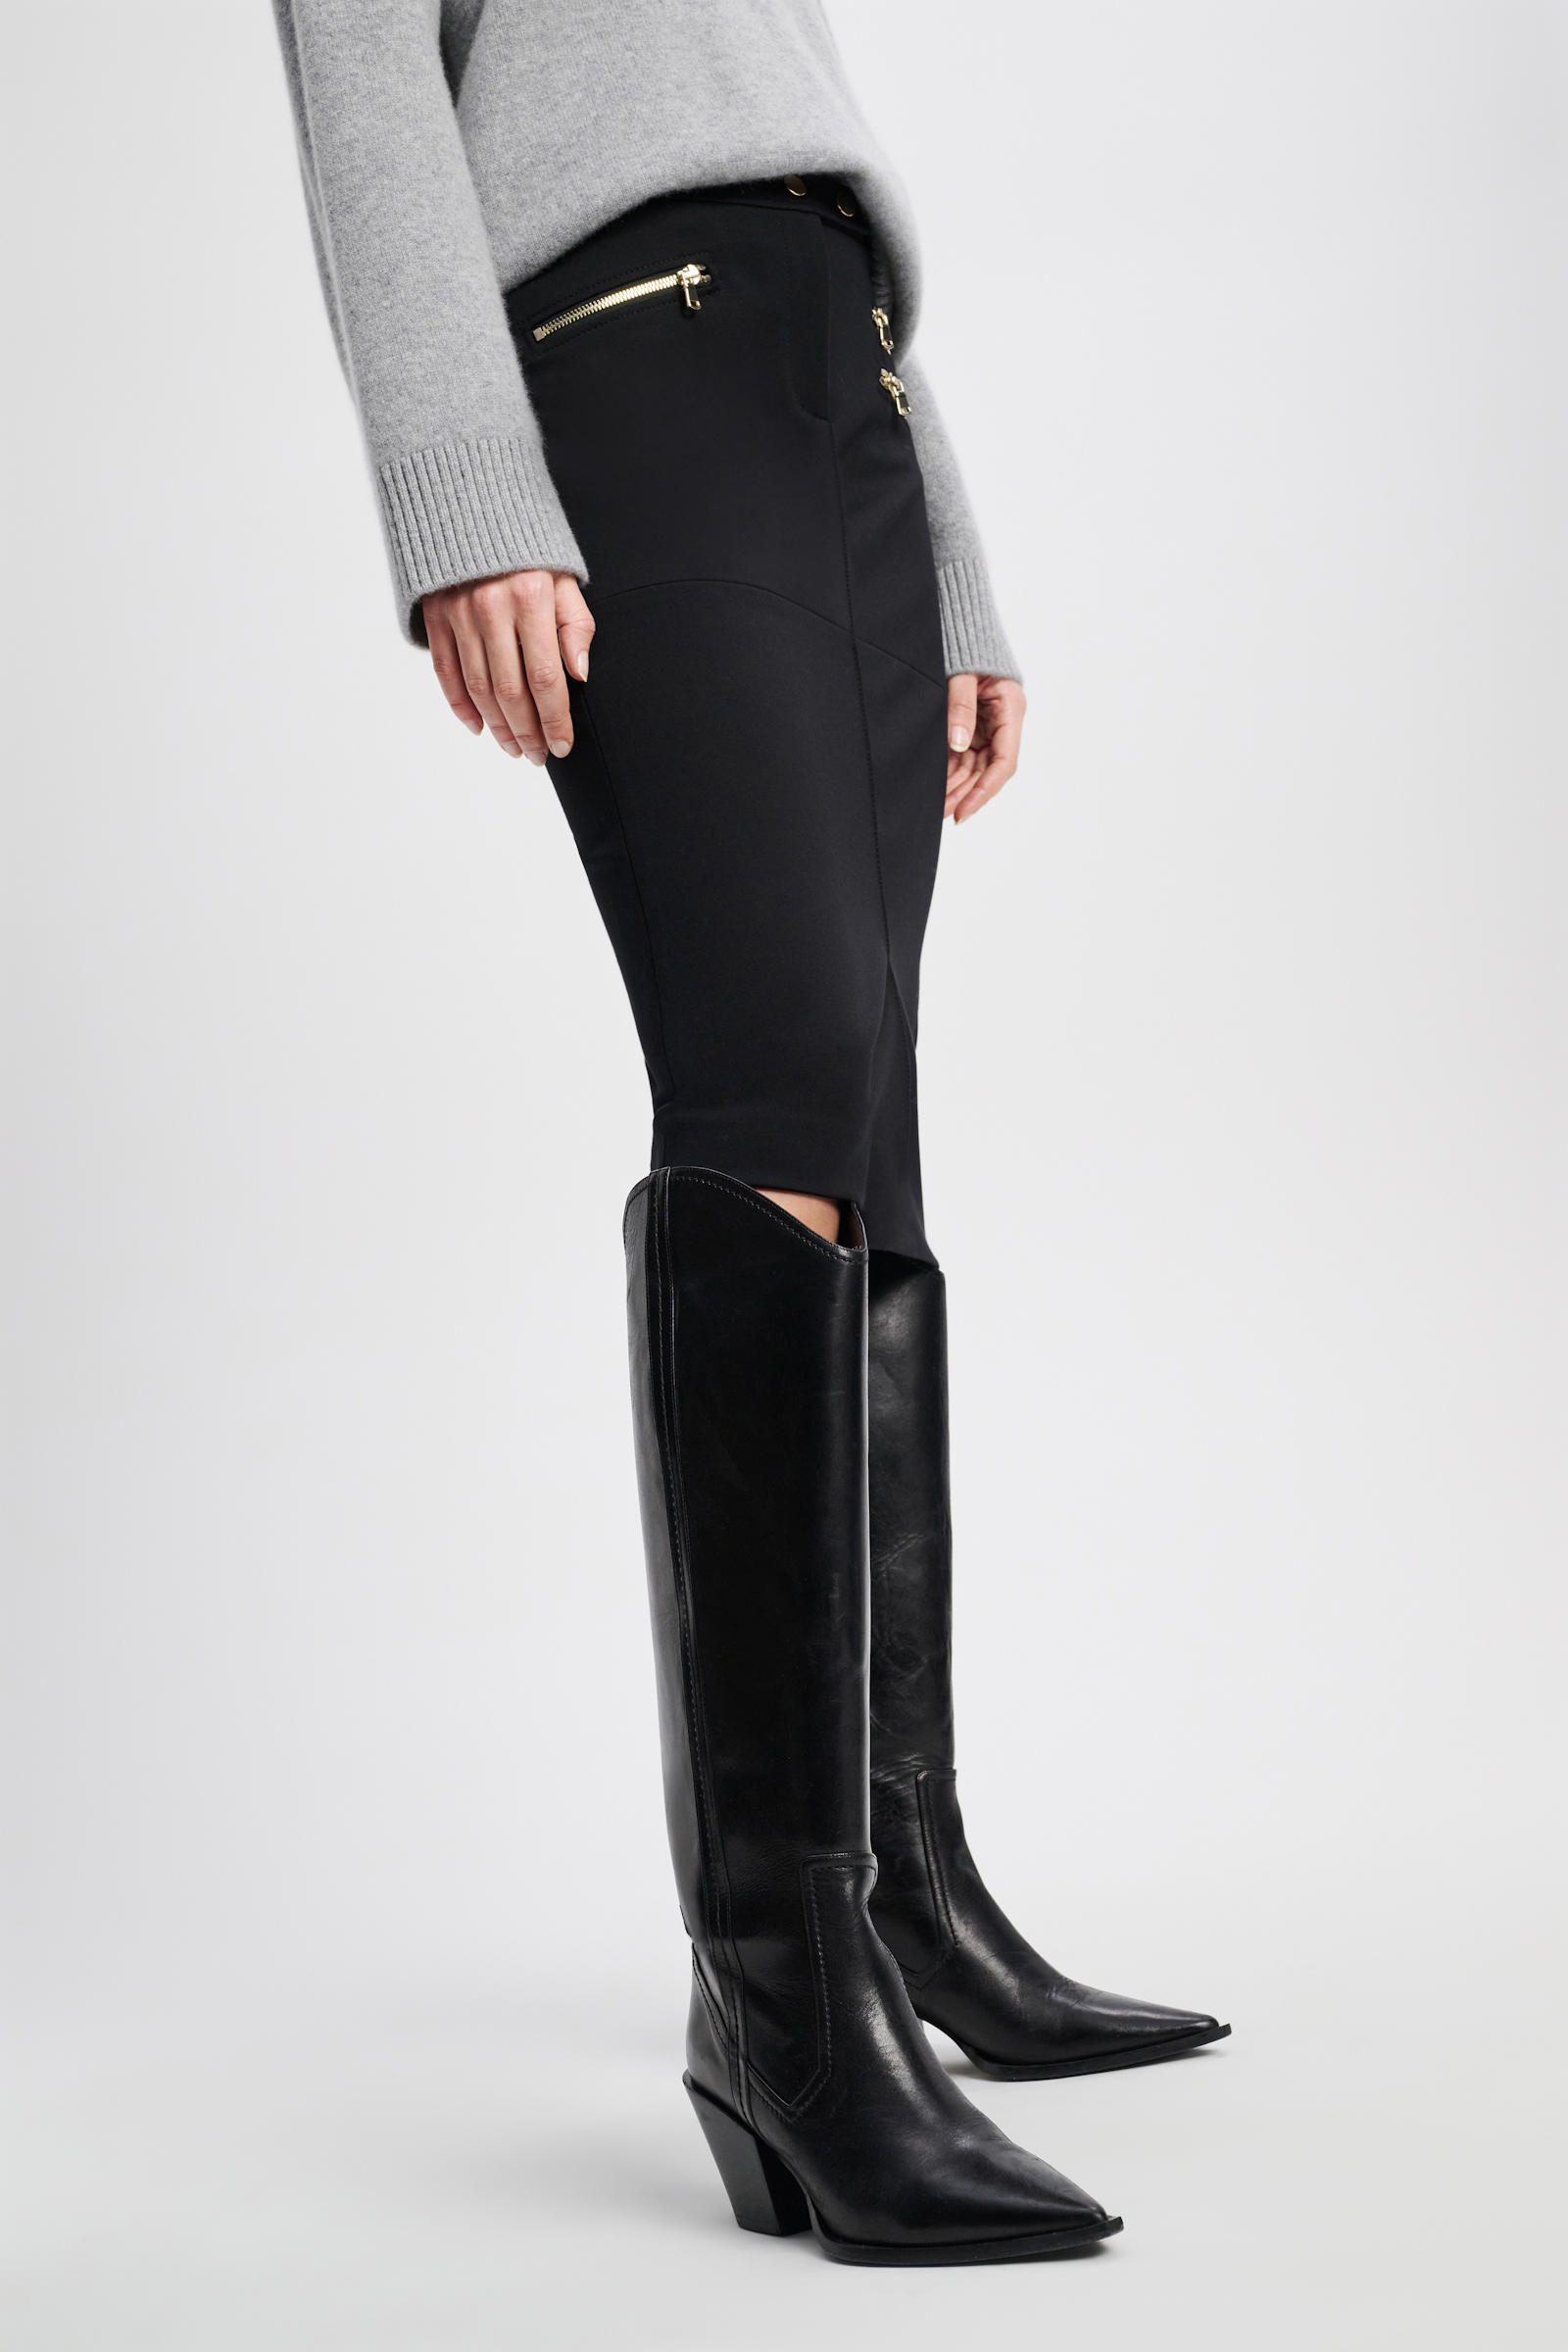 Dorothee Schumacher Punto Milano skirt with zipper detailing pure black